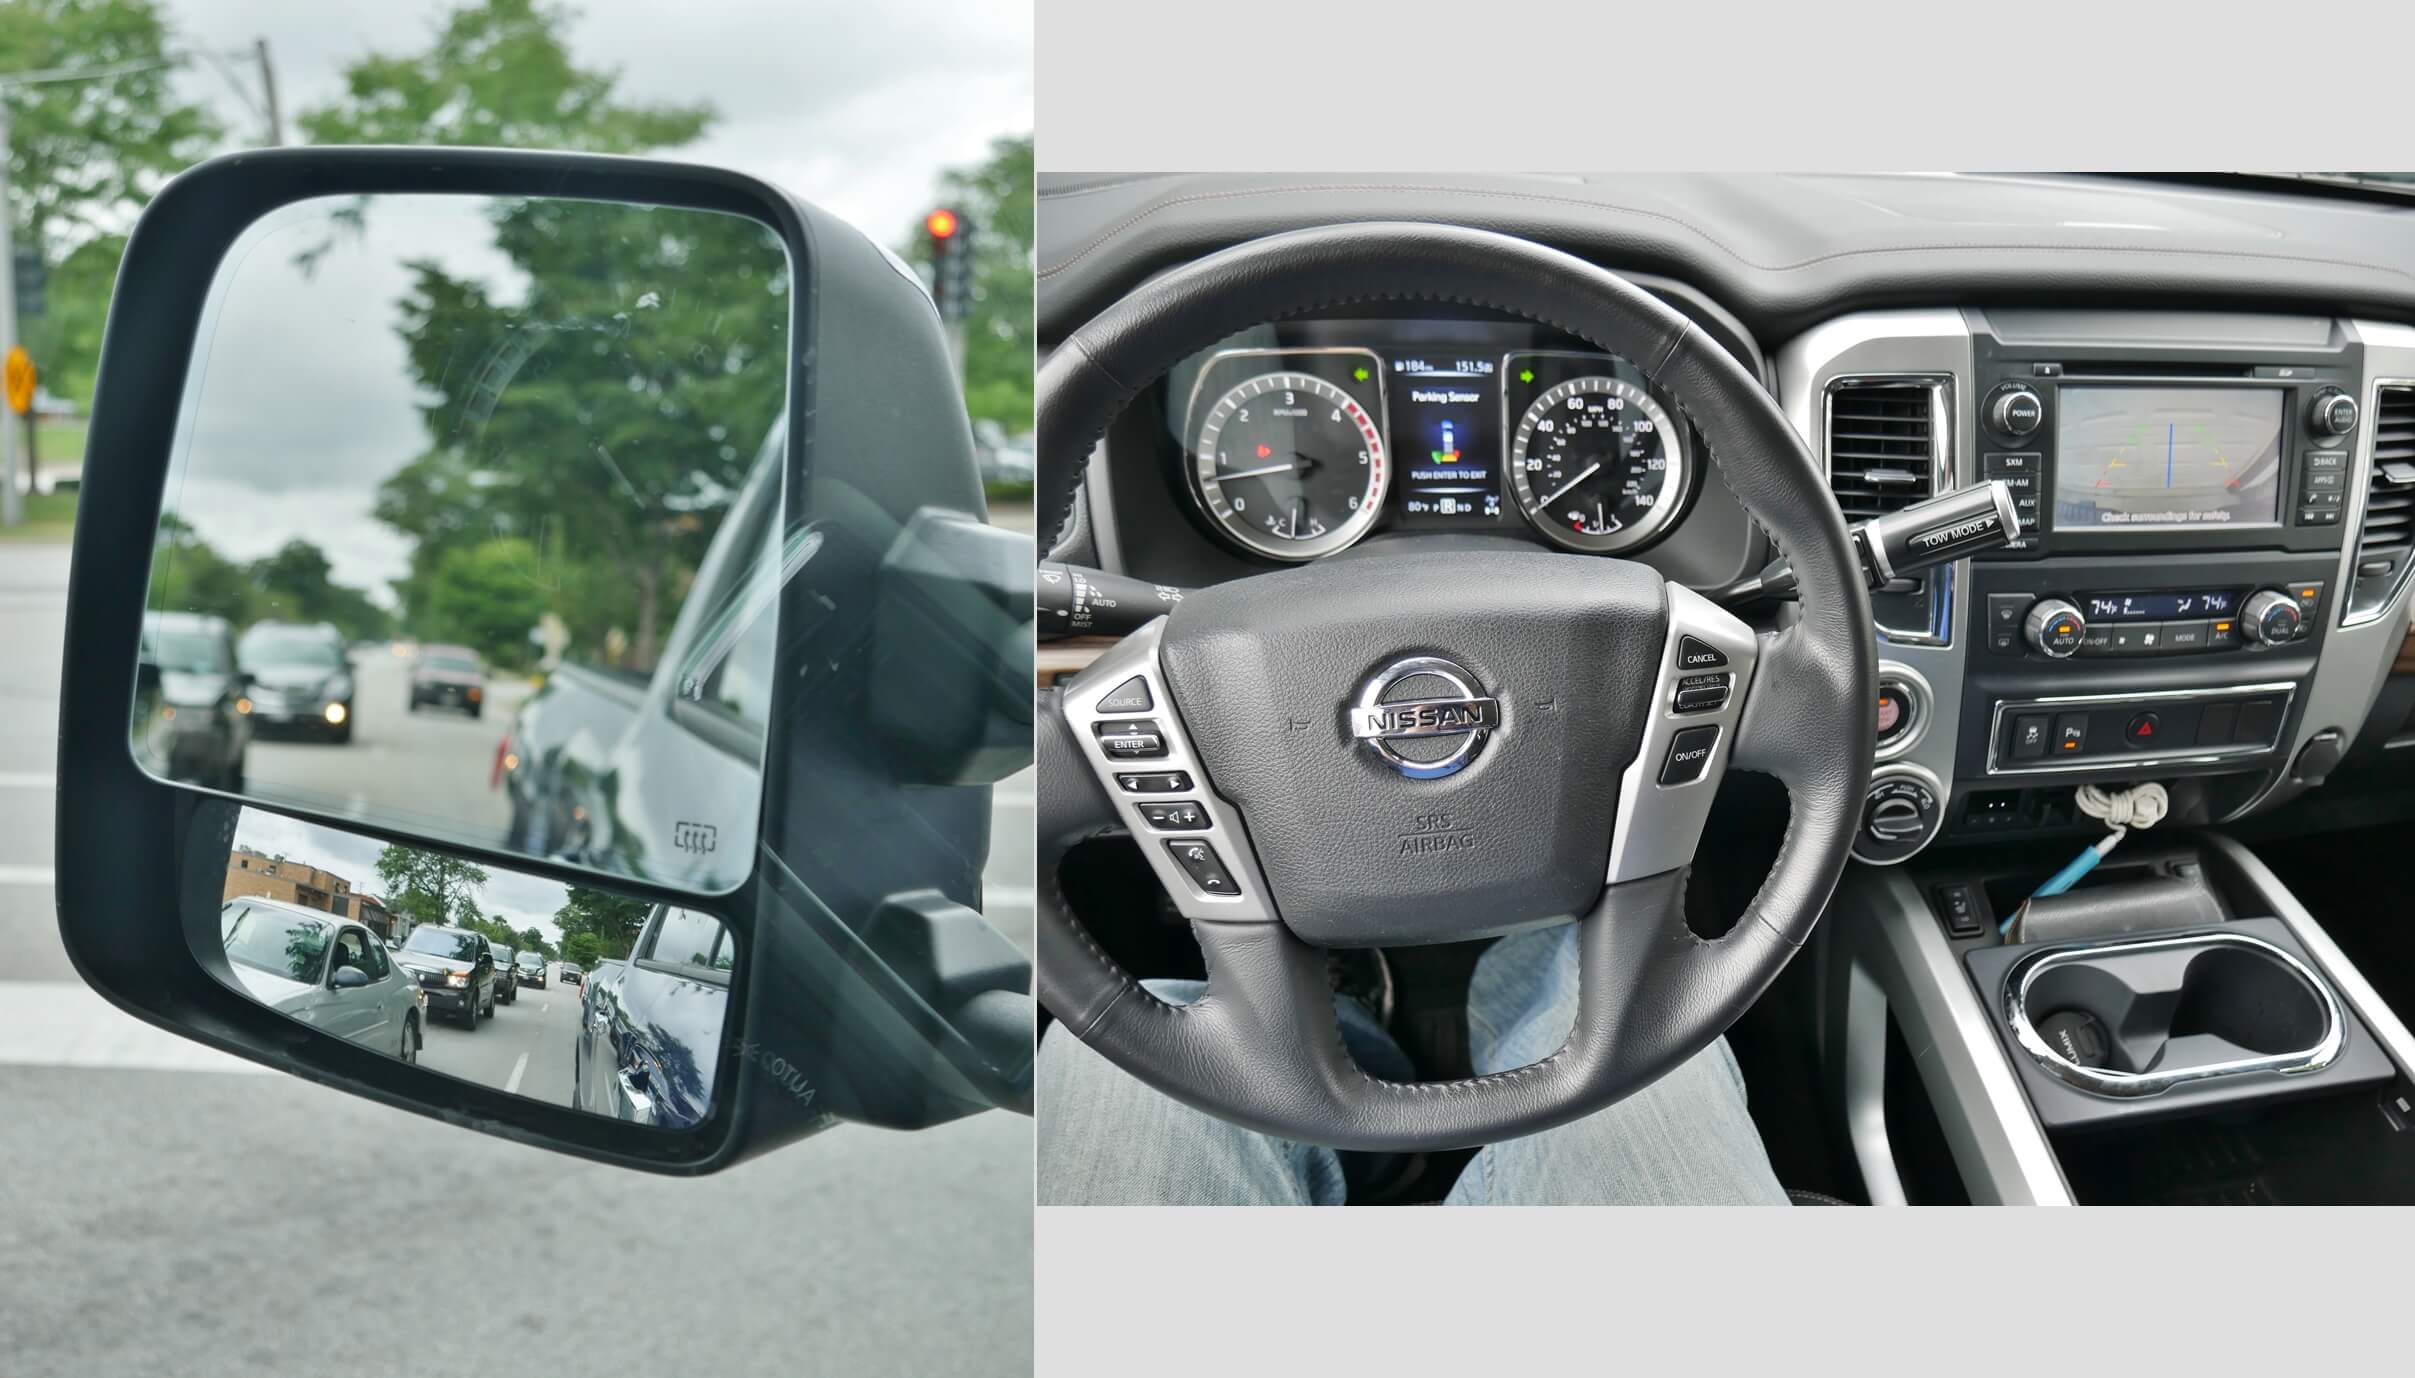 2017 Nissan Titan XD TD 4x4: Blind spots reduced by extending split wing mirror w/ lower convex frame & rear camera + sonar audible front & rear park assist